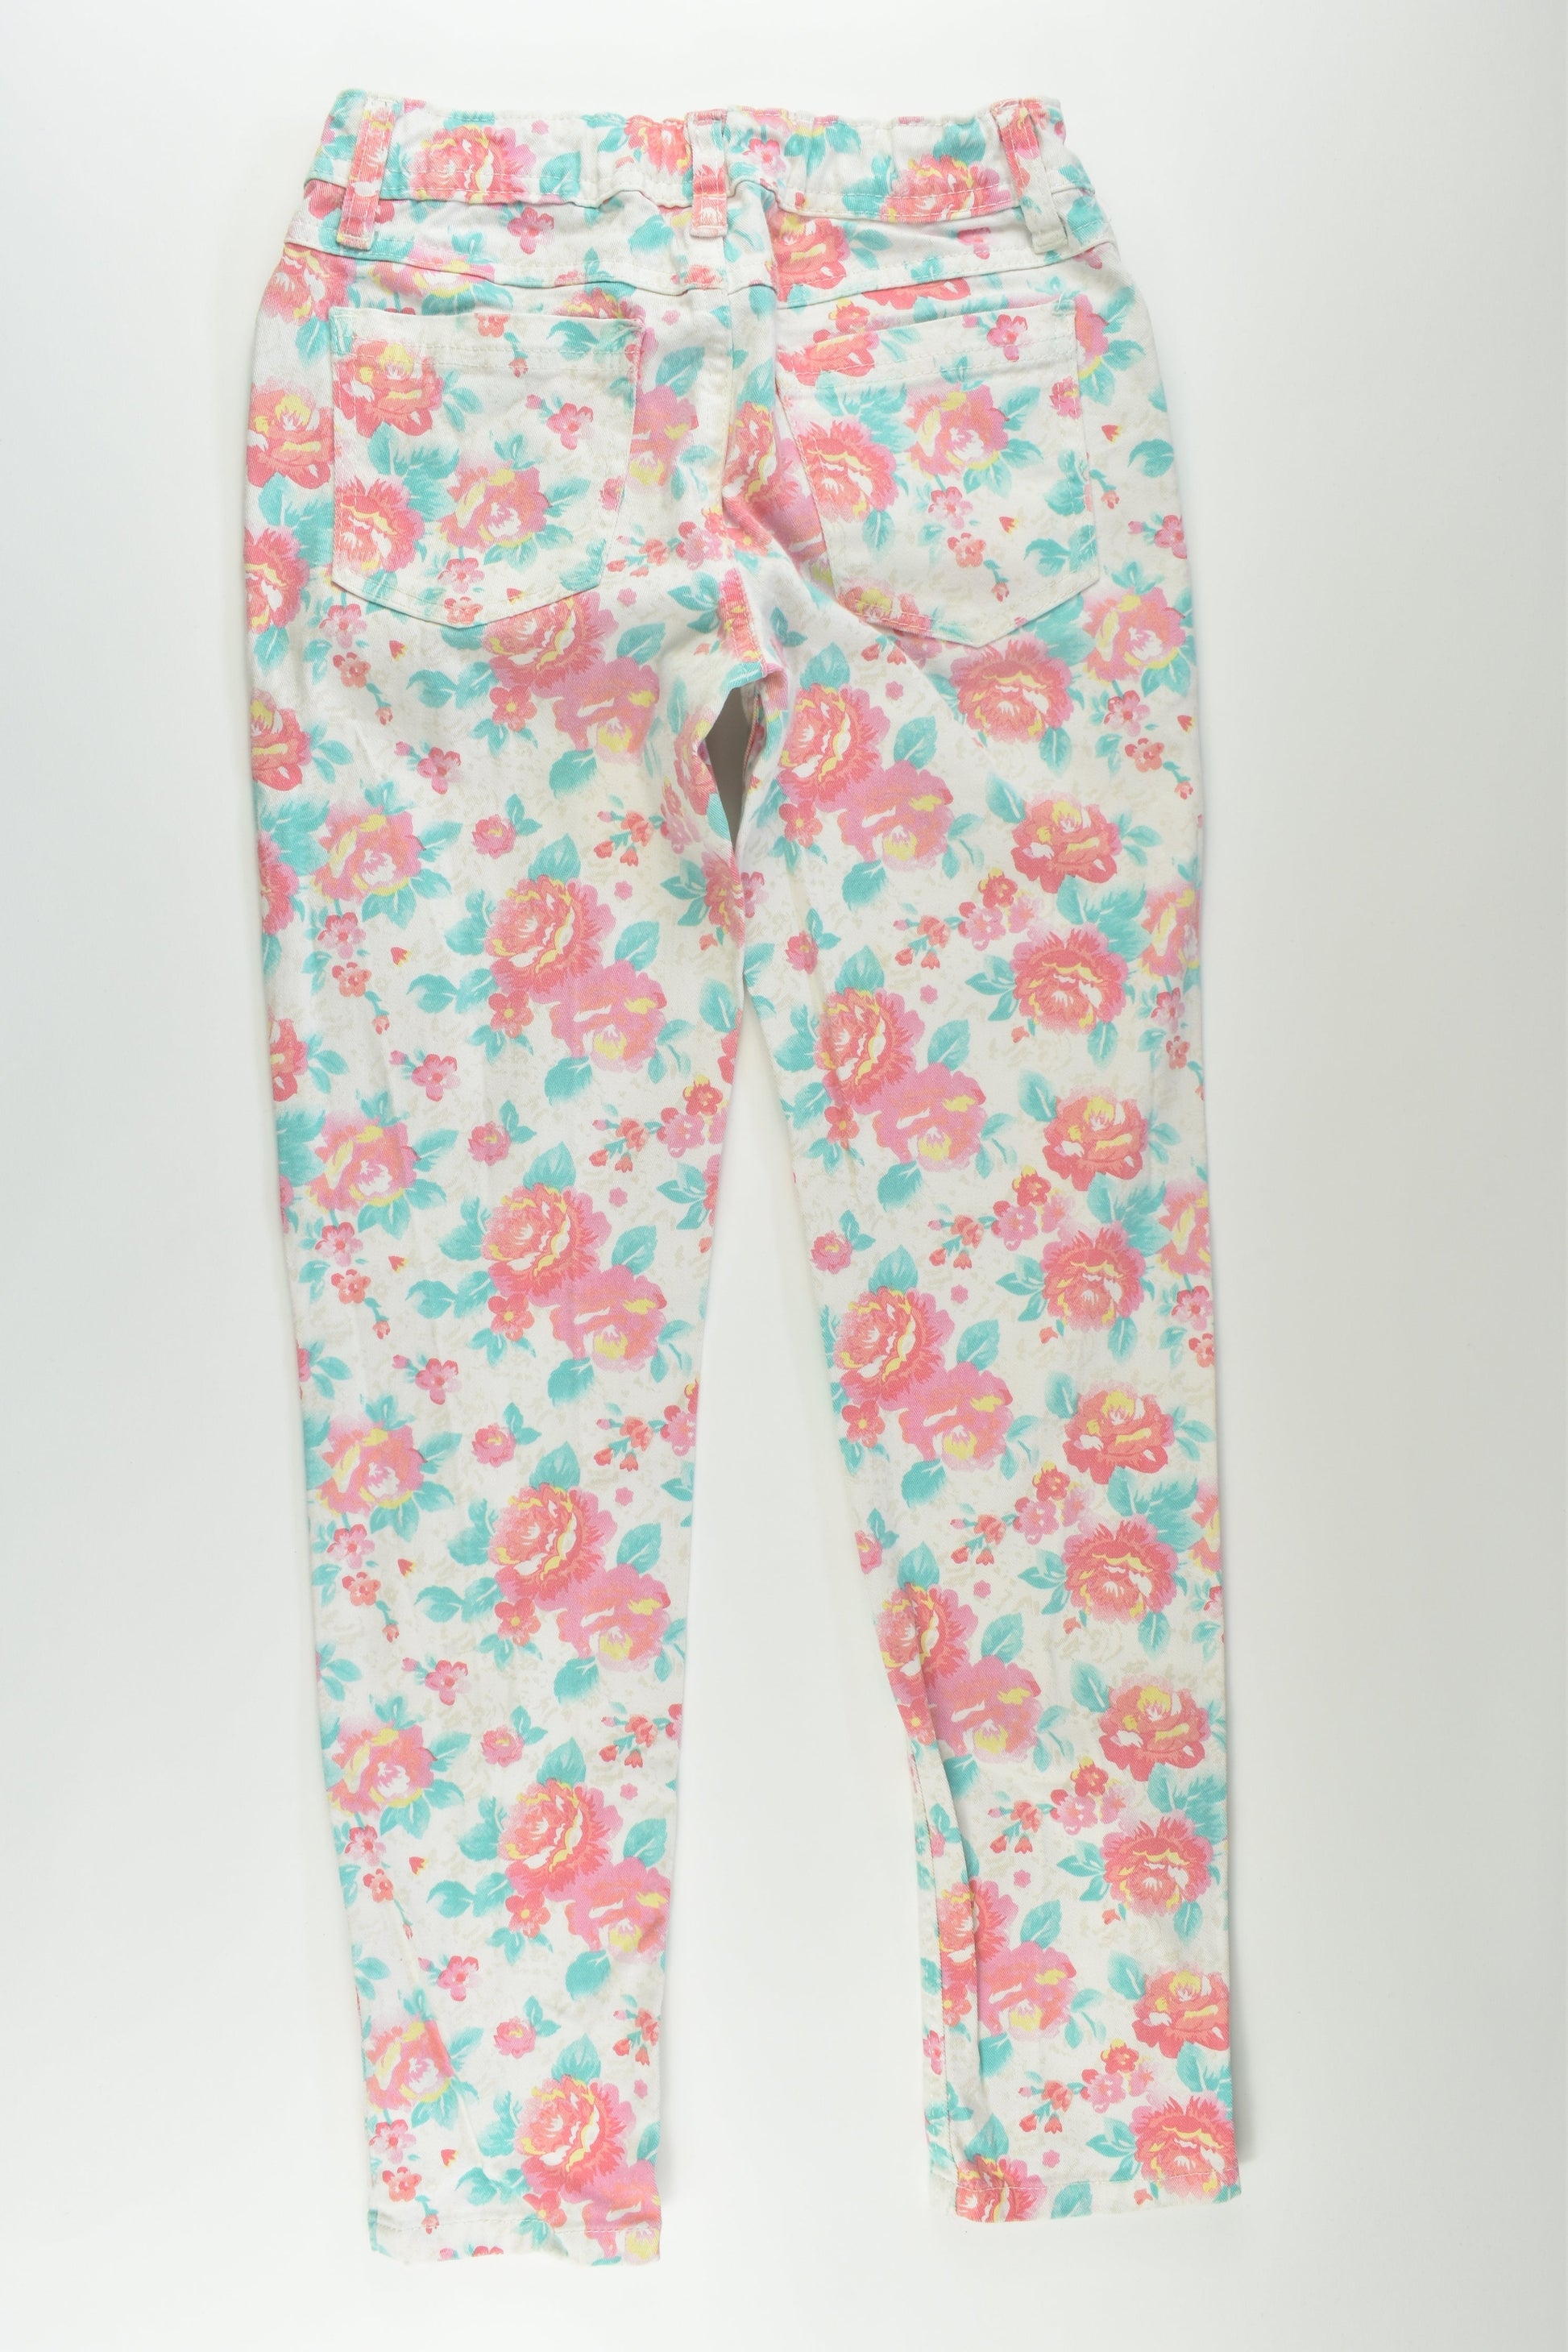 Target Size 9 Floral Denim Pants